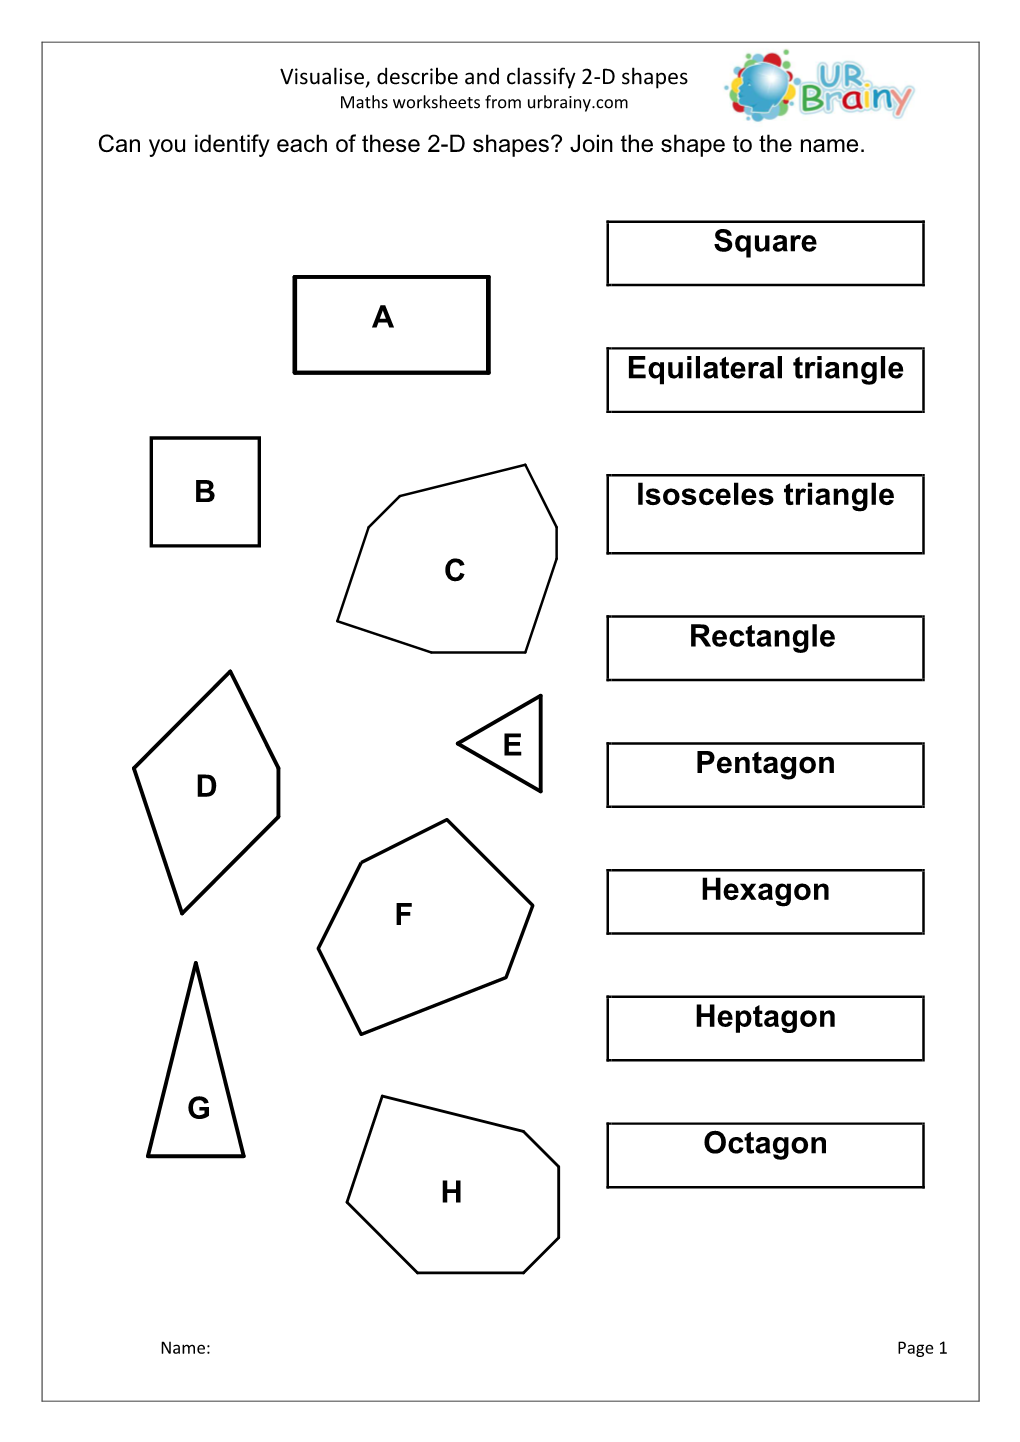 Square Equilateral Triangle Isosceles Triangle Rectangle Pentagon Hexagon Heptagon Octagon a C B F E D